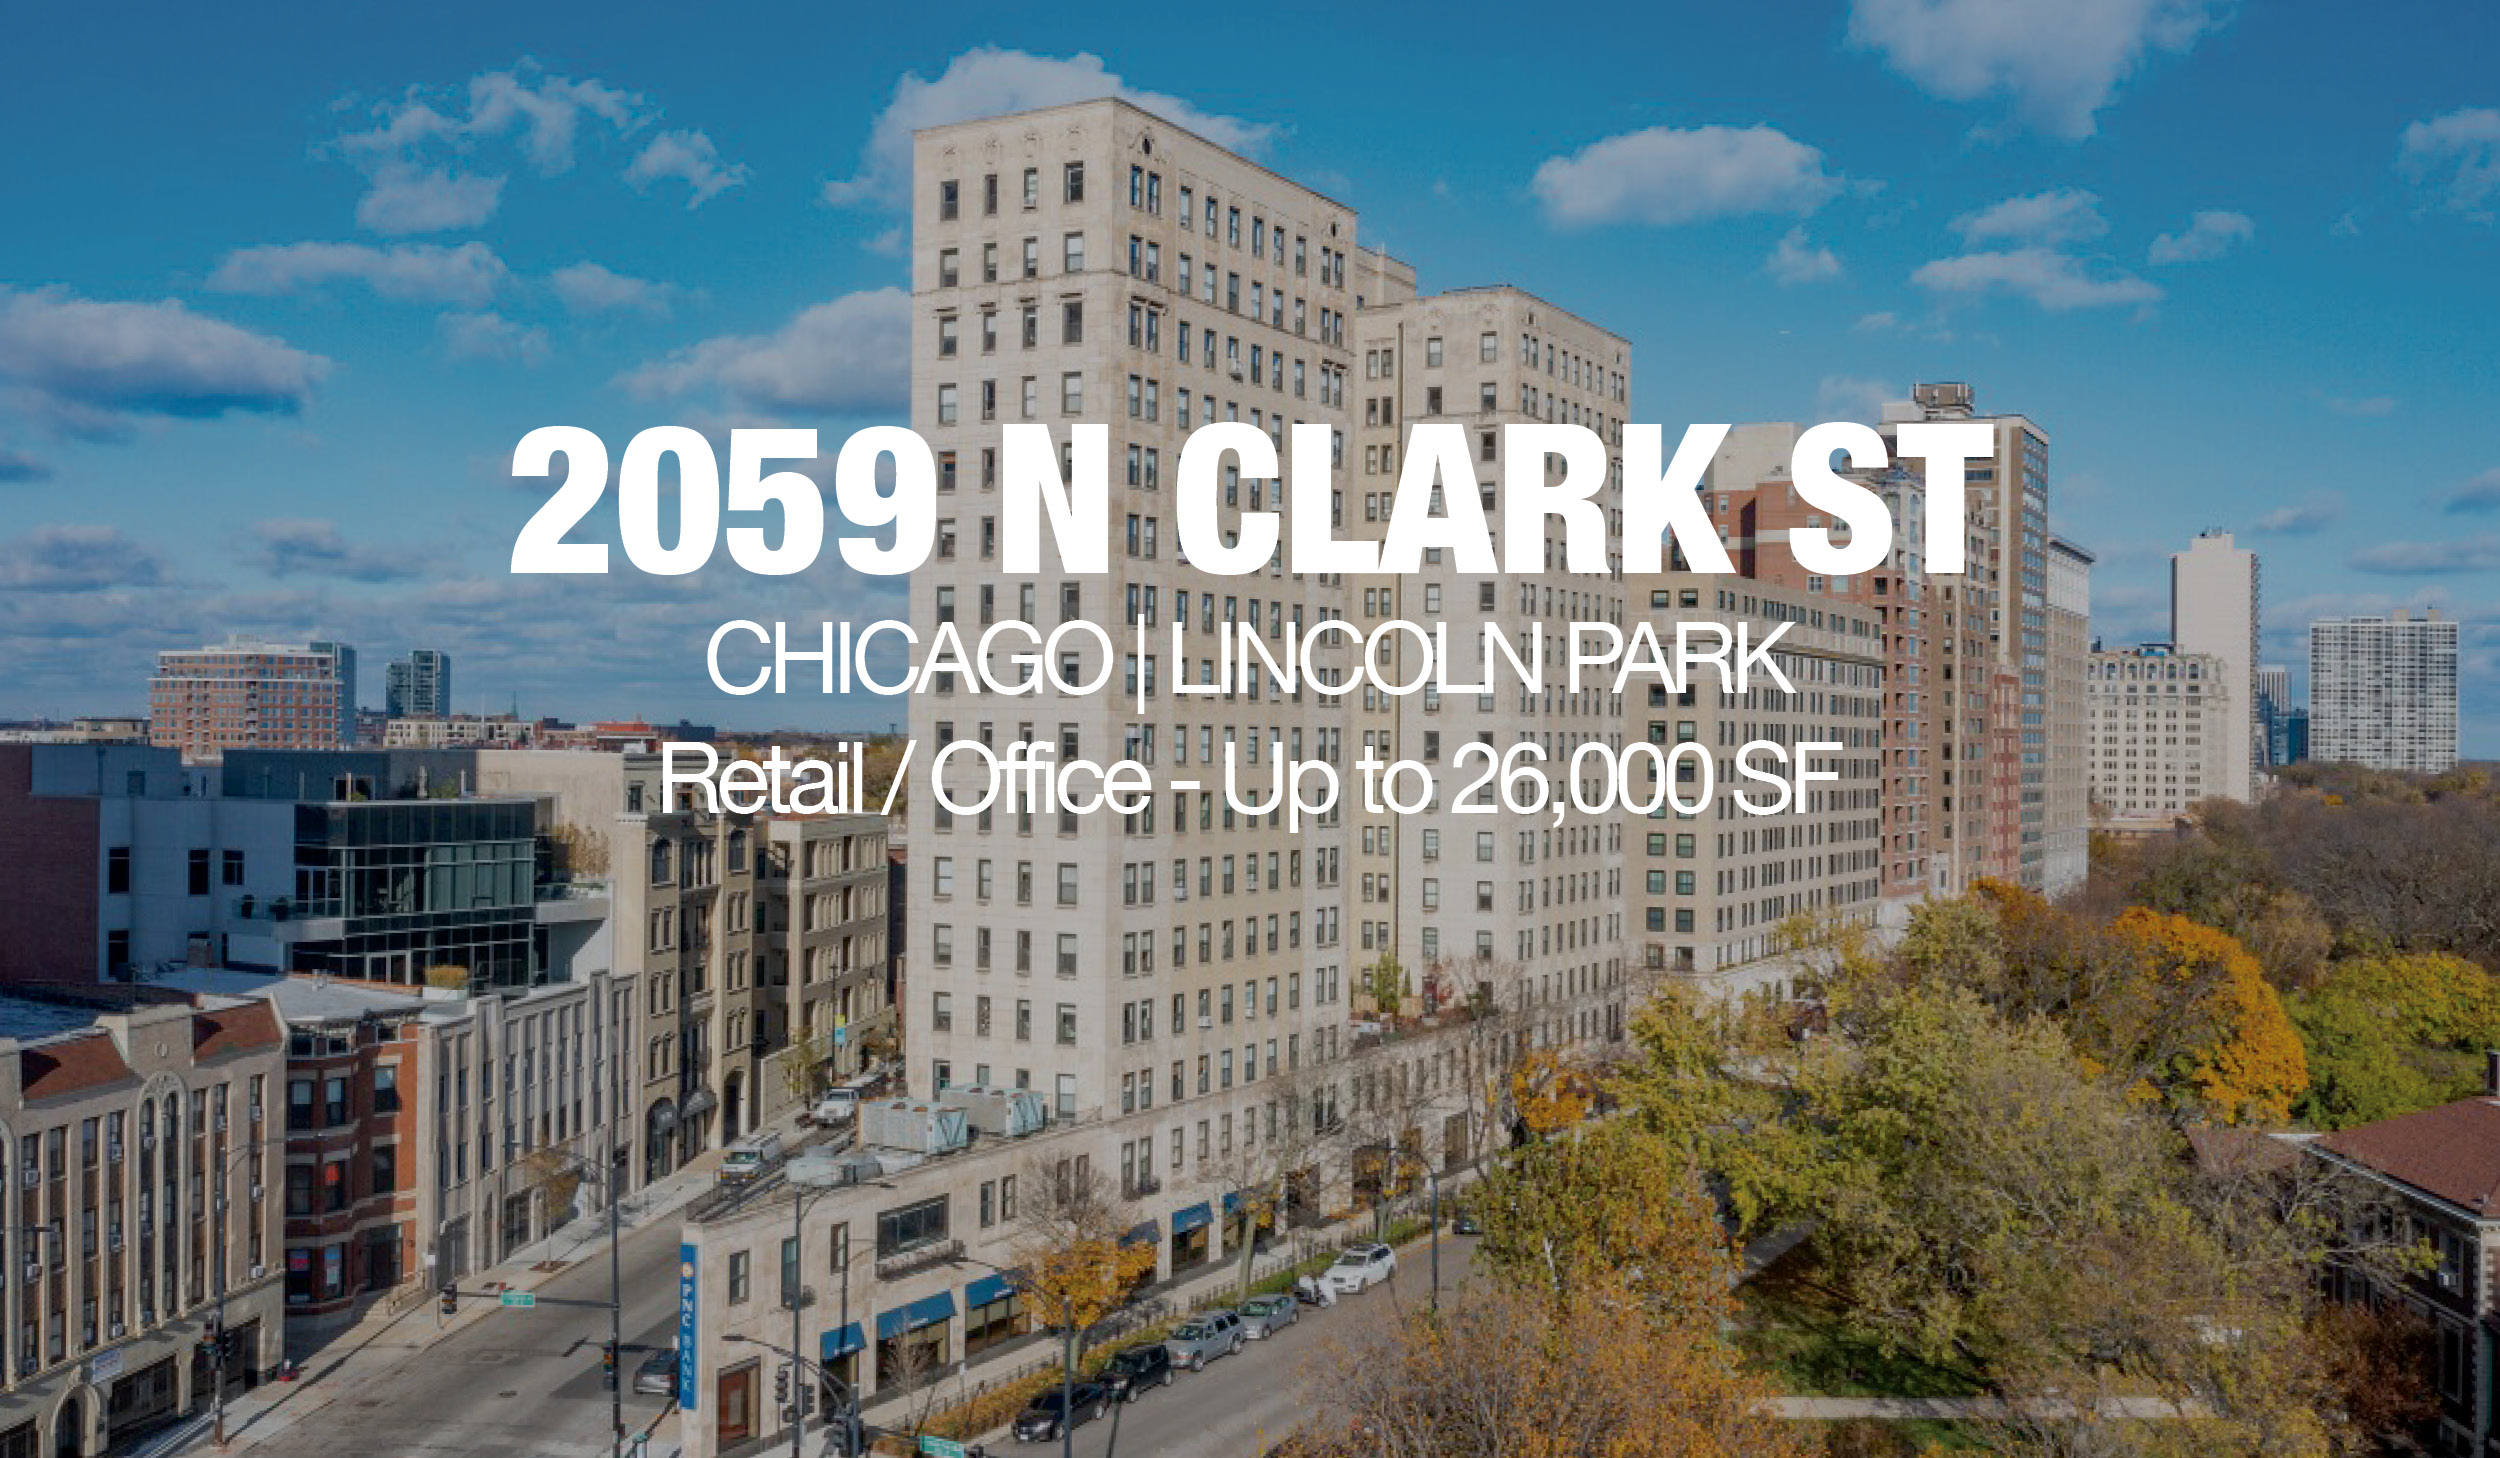 2059 N Clark - Goldstreet Partners